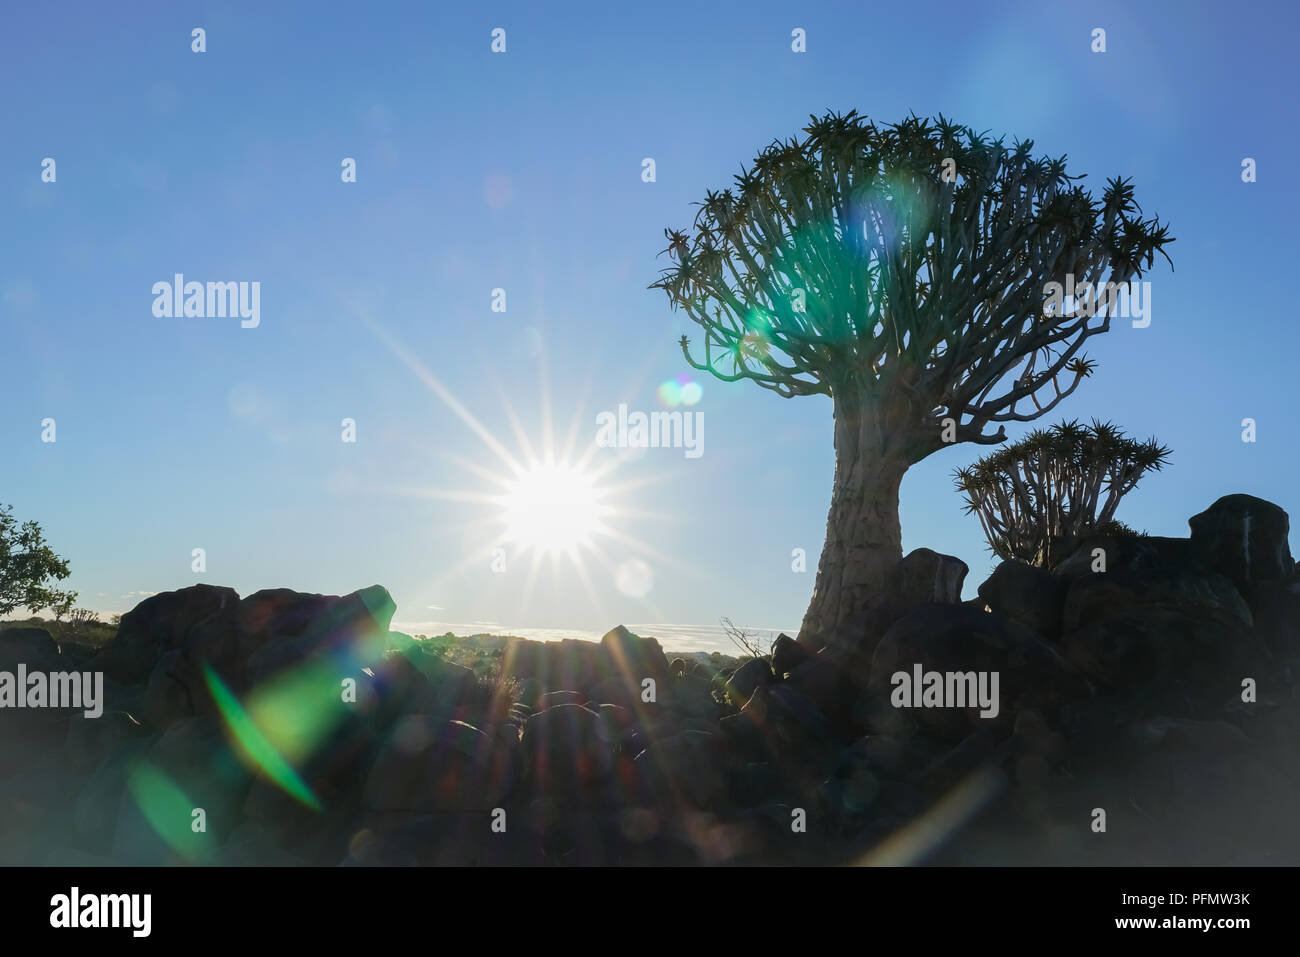 Instagram style Sunburst am späten Nachmittag durch Bäume in Namibia Köcherbaumwald bei Keetmanshoop Stockfoto